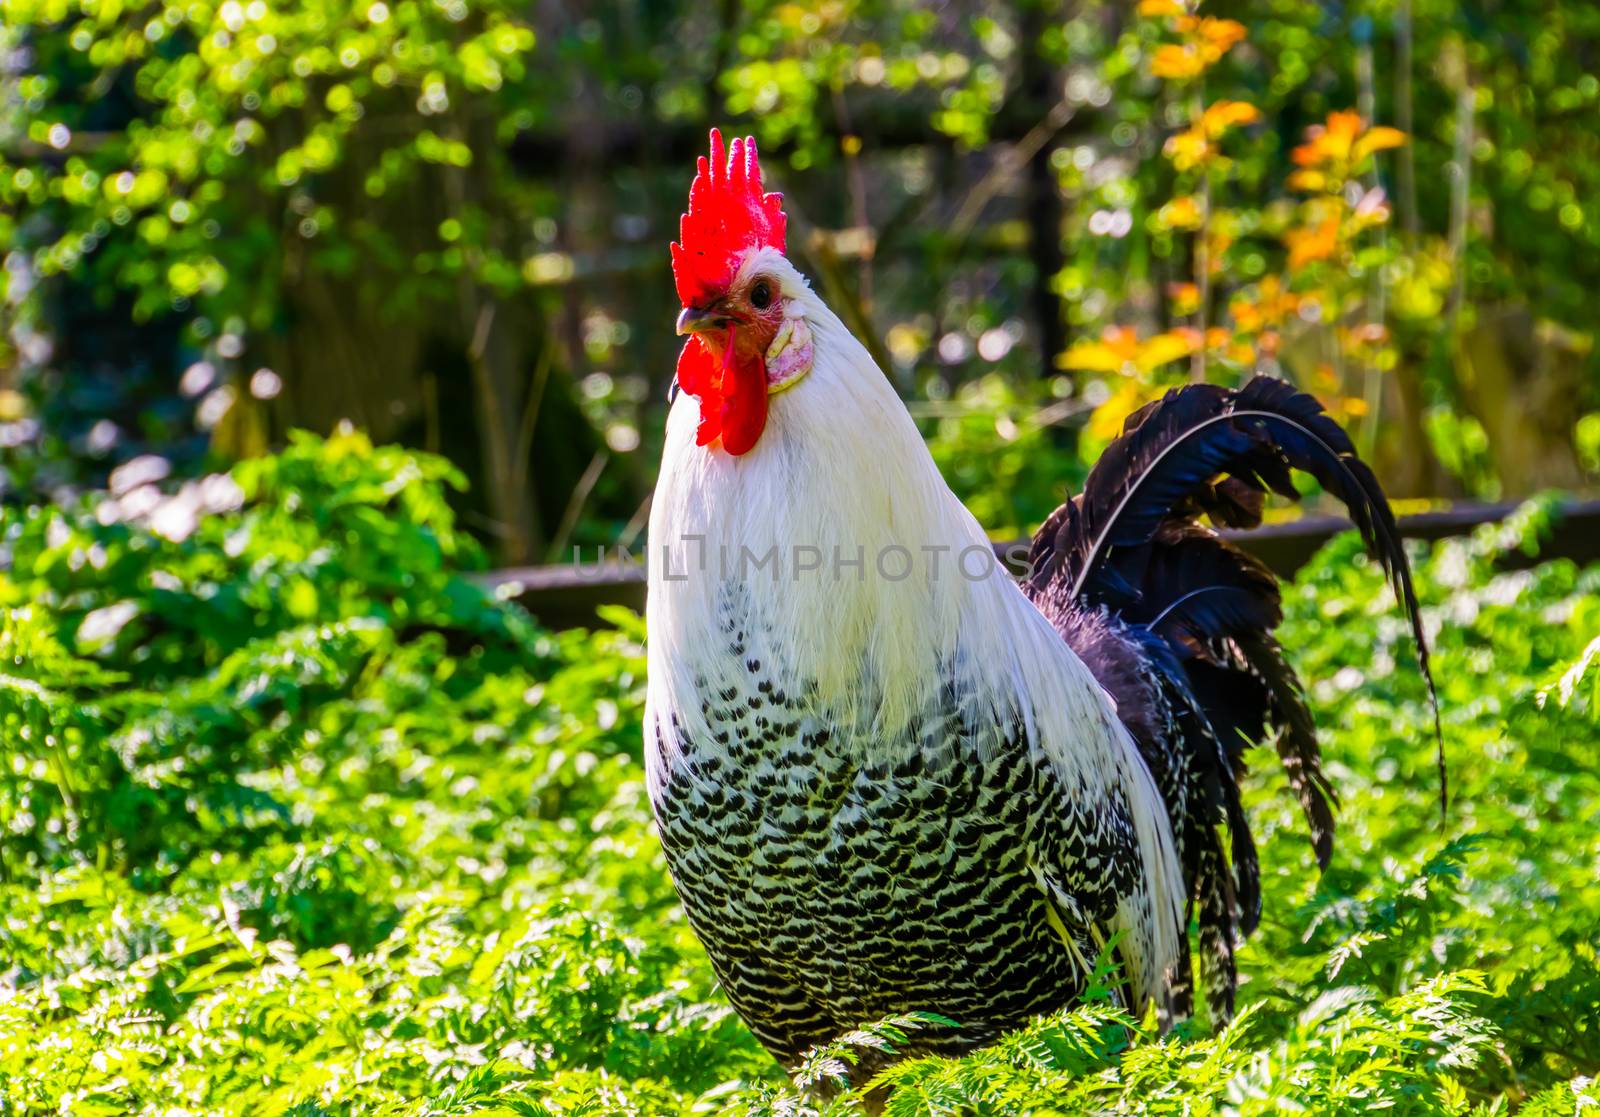 beautiful portrait of a black and white brakel chicken, popular breed from belgium by charlottebleijenberg